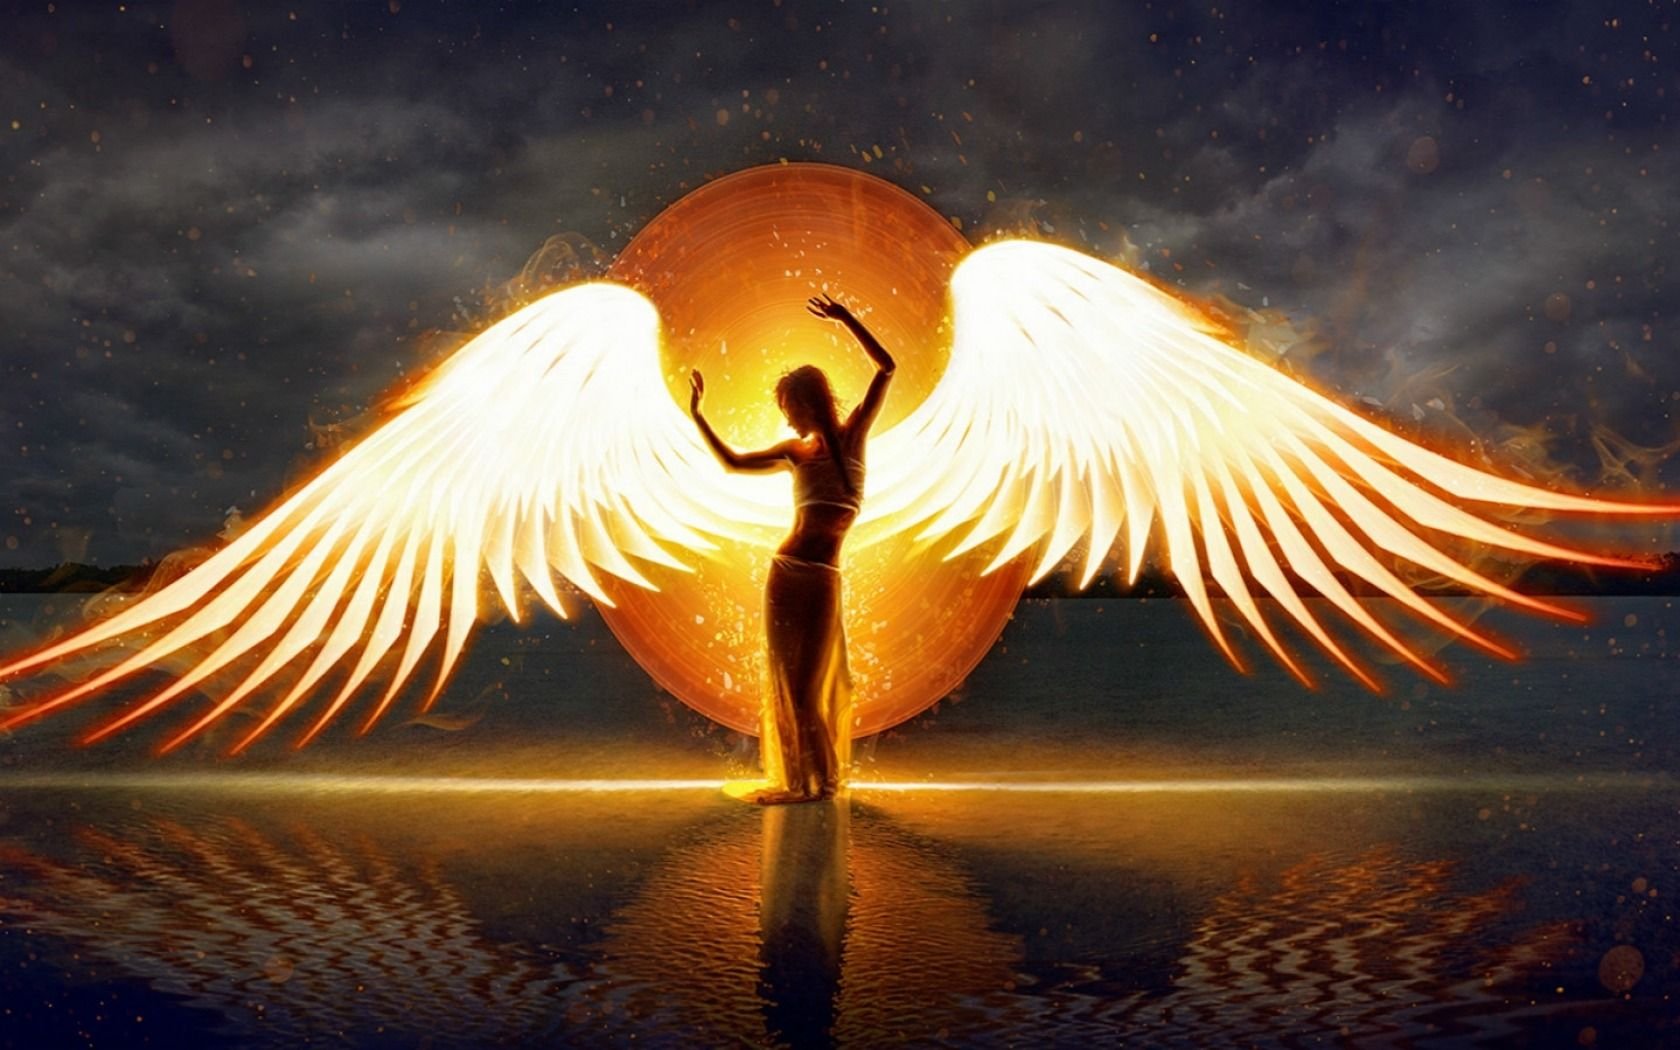 Сюжет два крыла. Ангел с крыльями. Птица солнца. Ангел с расправленными крыльями. Земные ангелы.